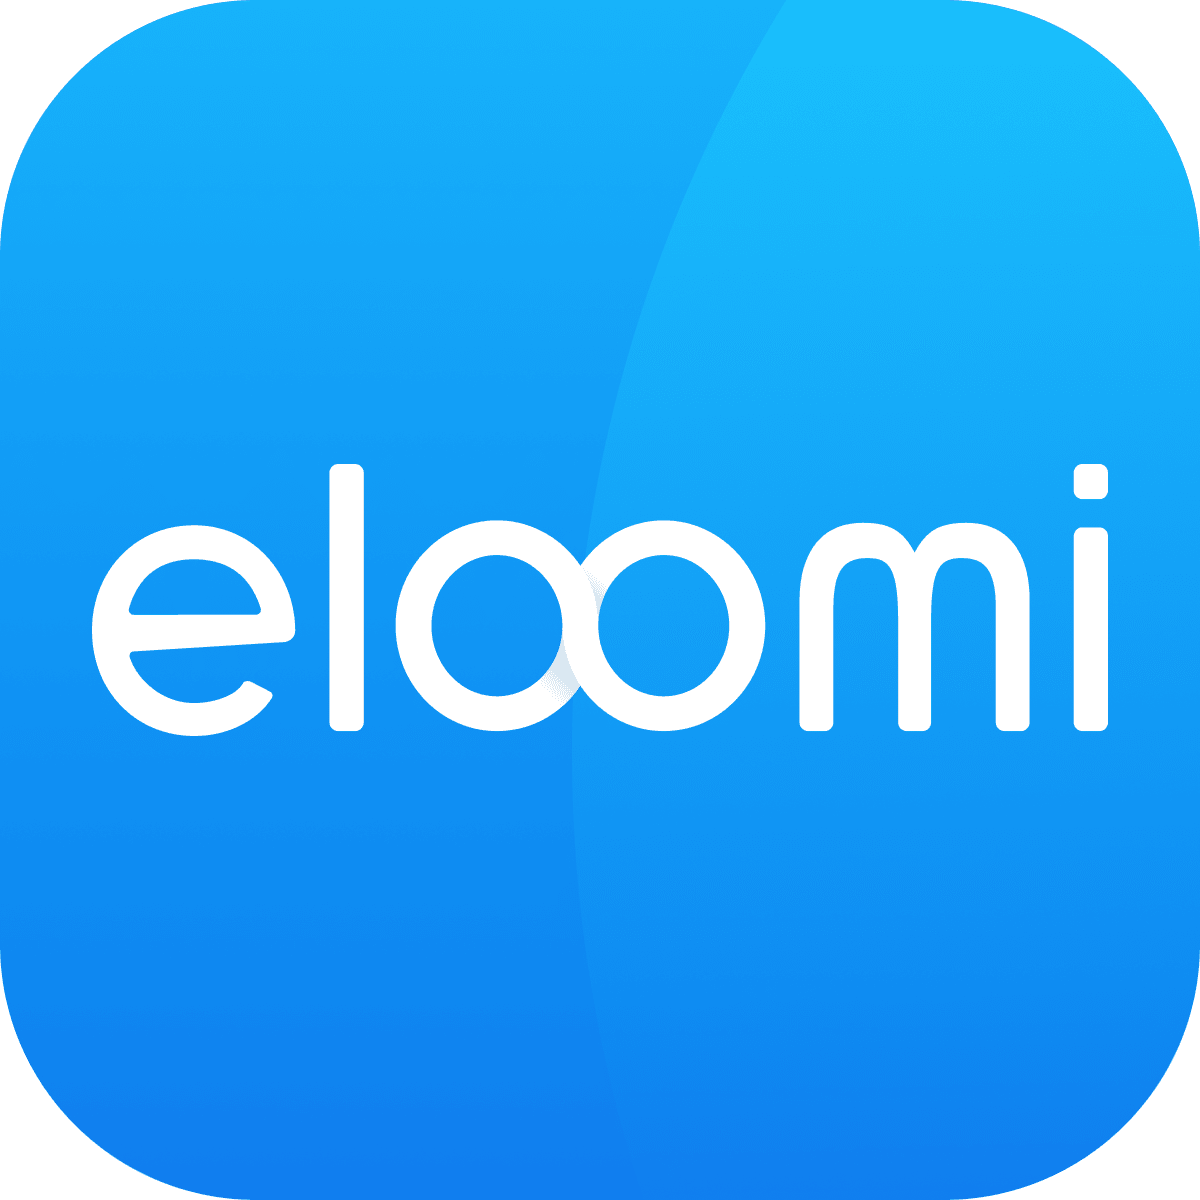 HiBob's integration with eloomi